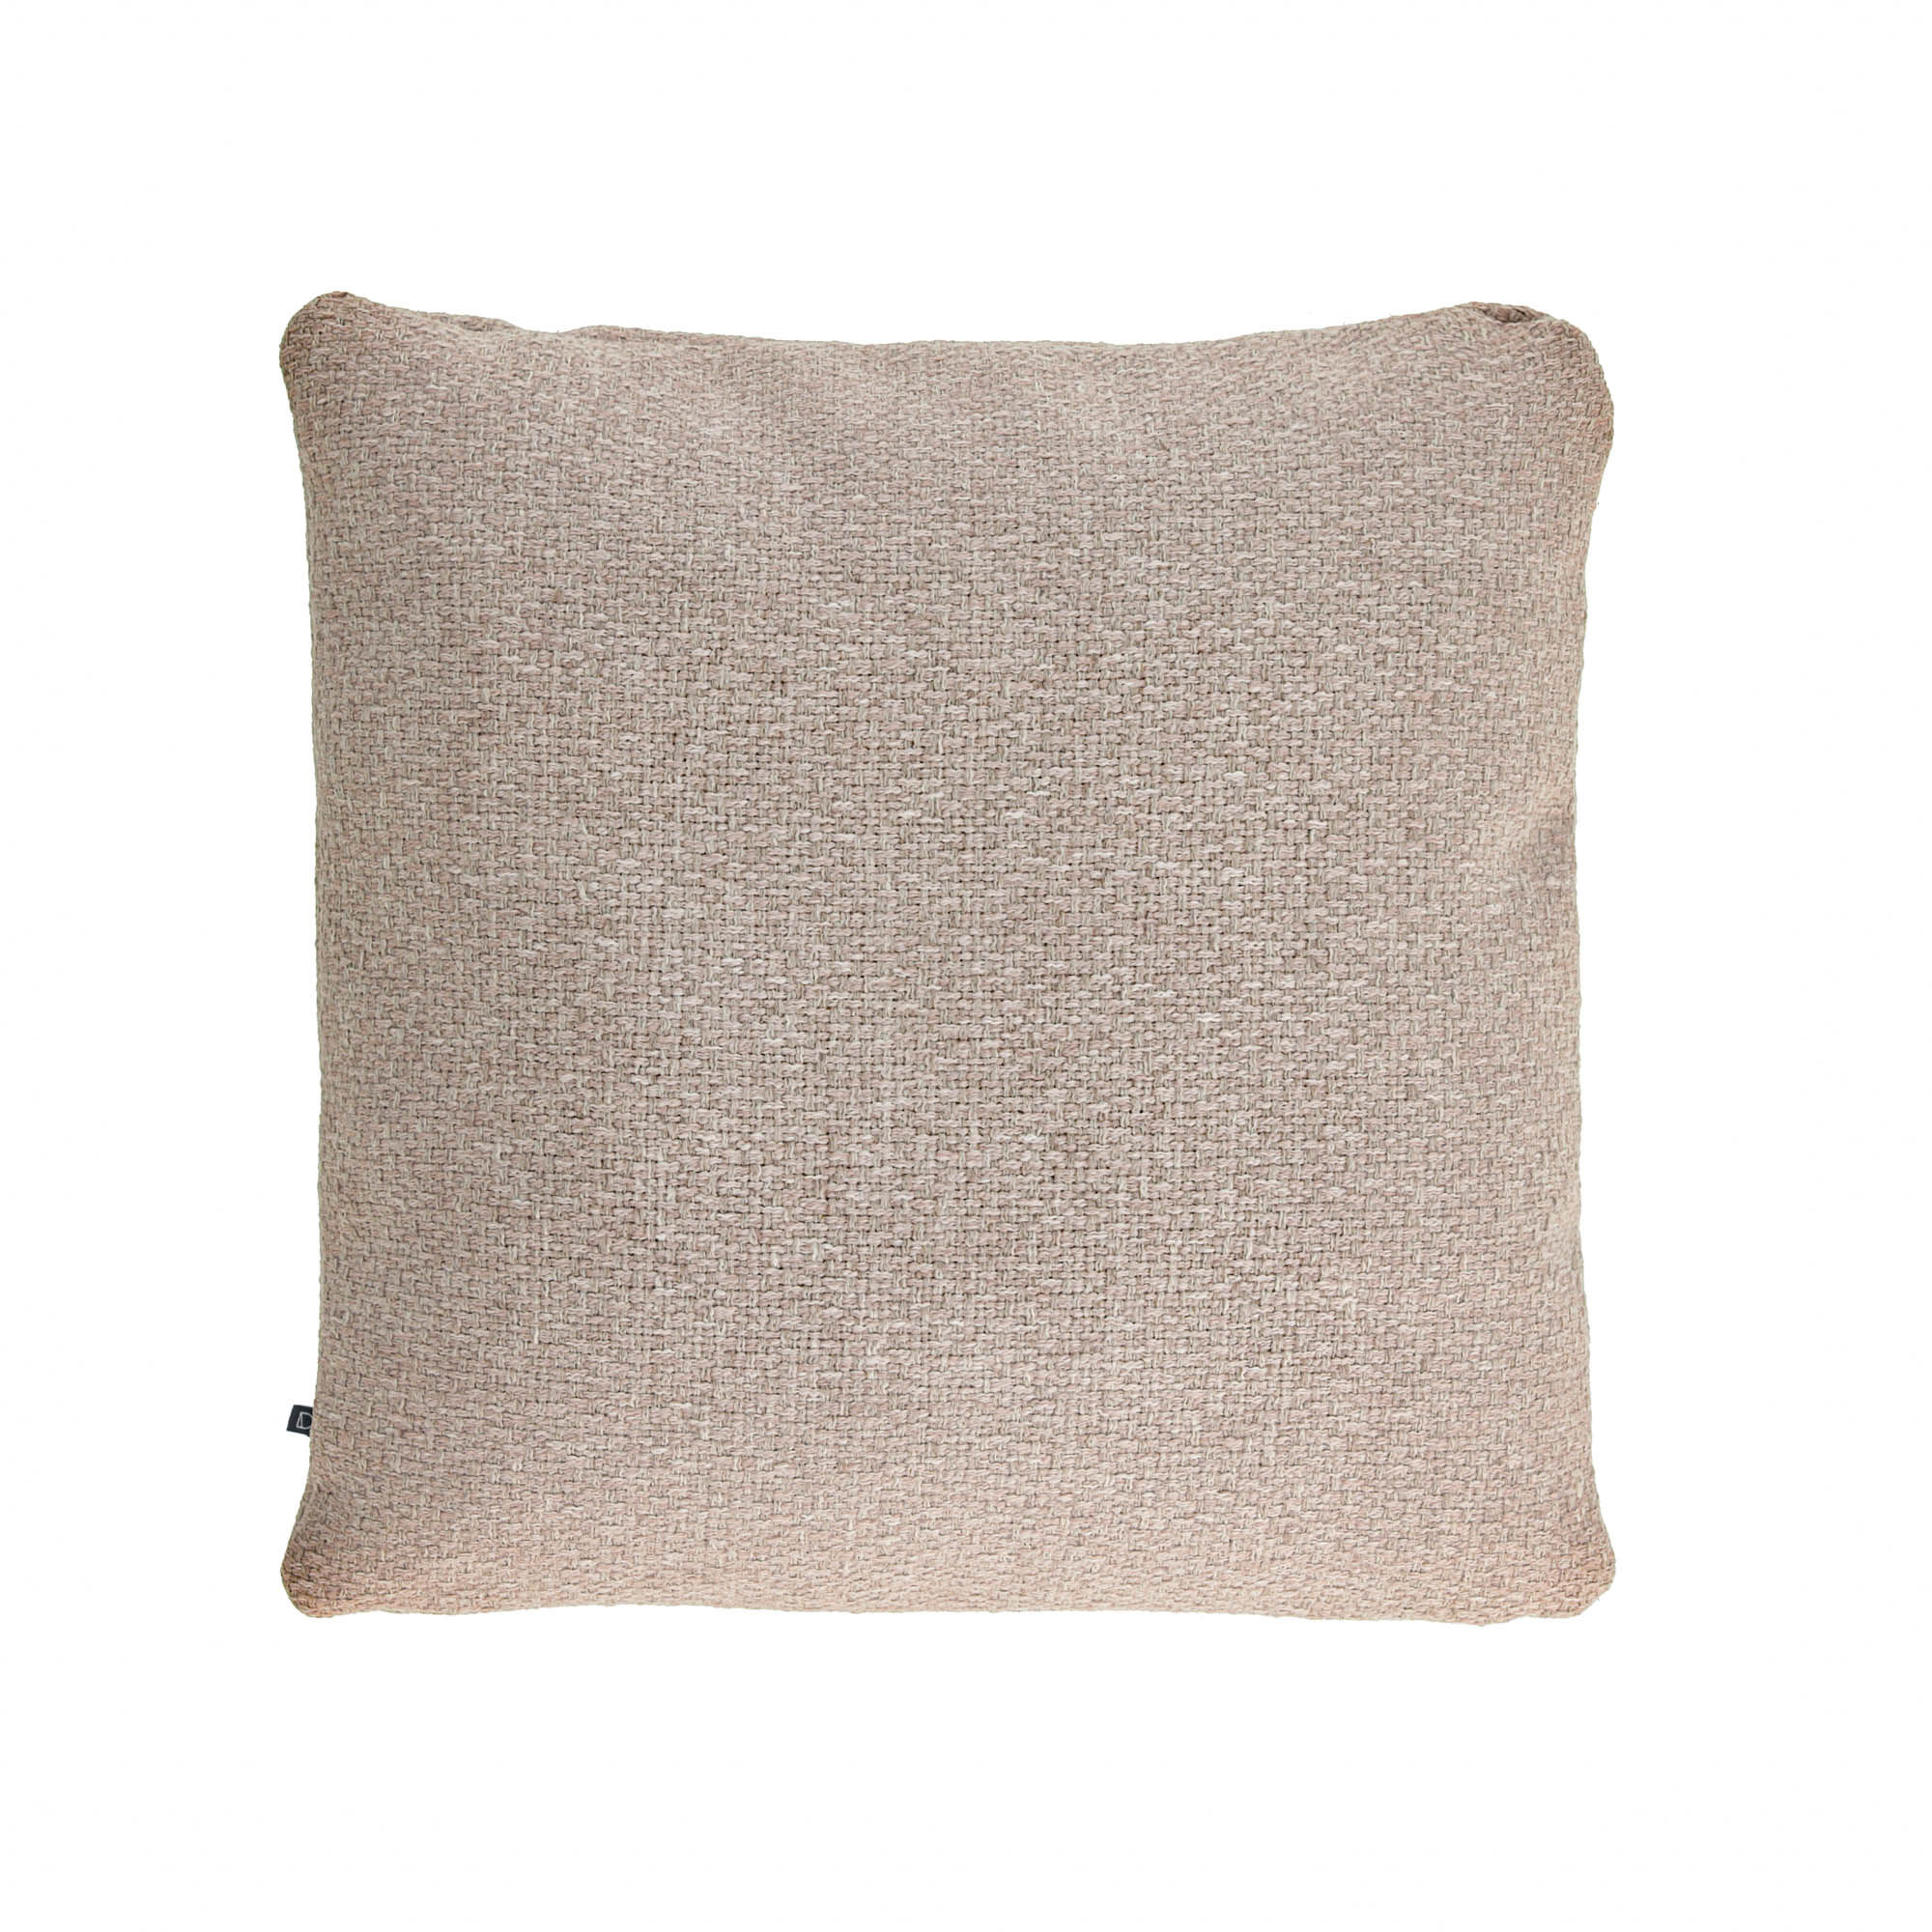 Kave Home Noa beige cushion cover 45 x 45 cm